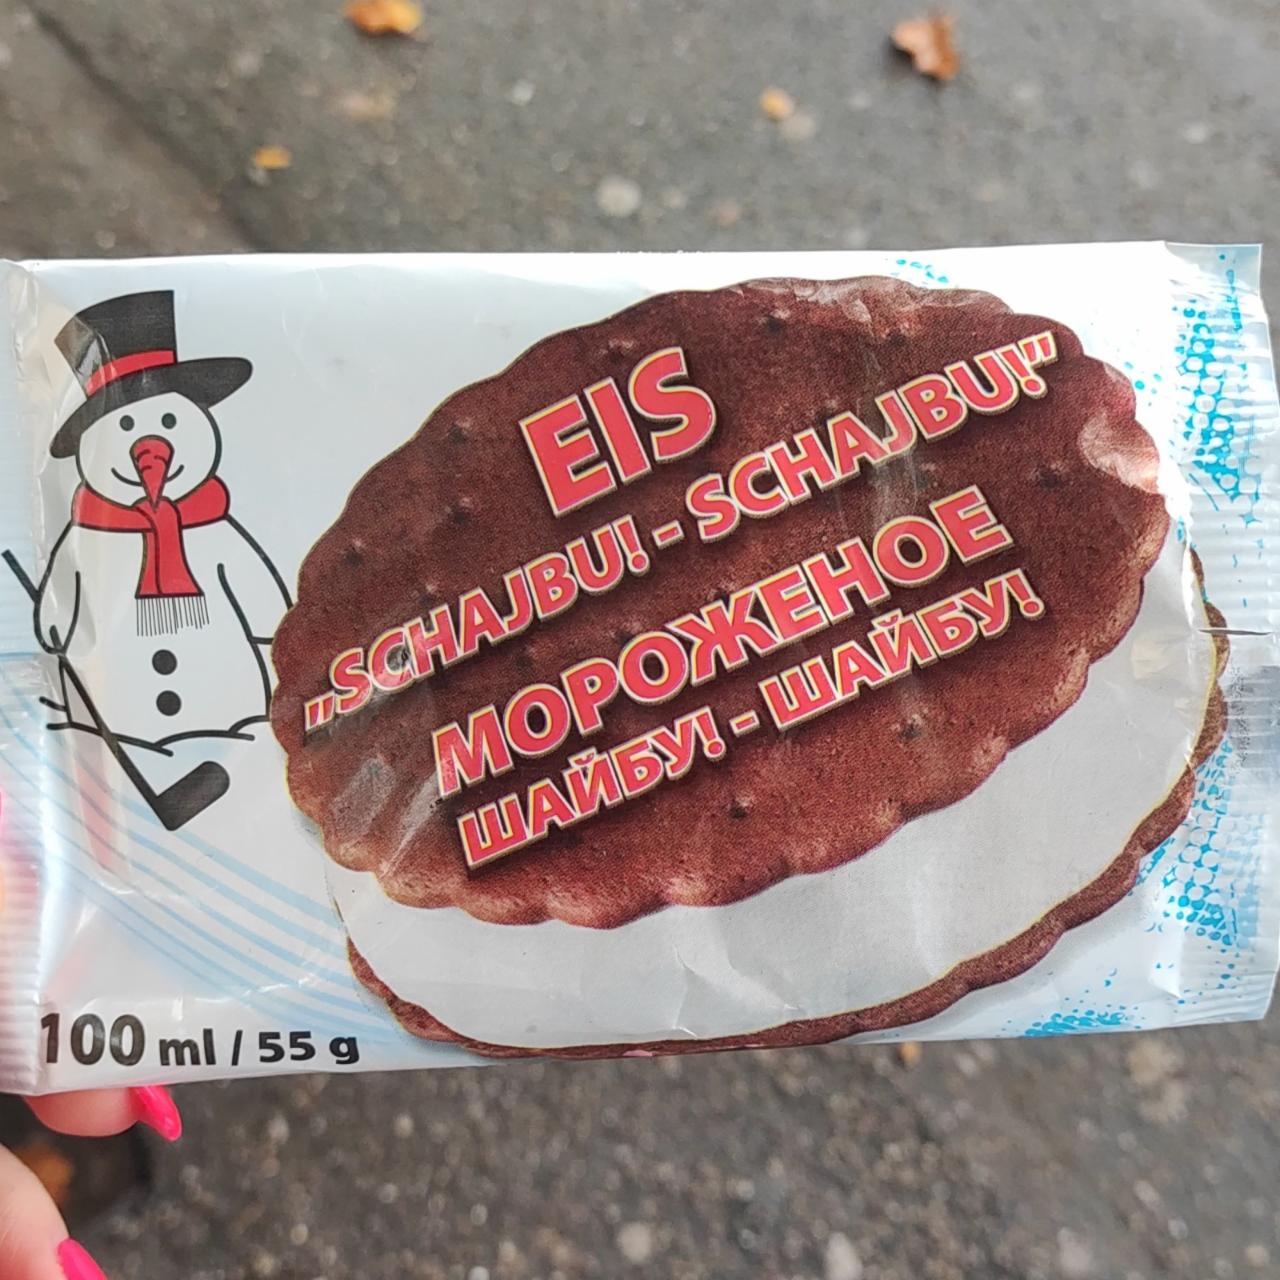 Фото - Мороженое Шайбу! Шайбу! Schajbu! Schajbu! Edelweiss